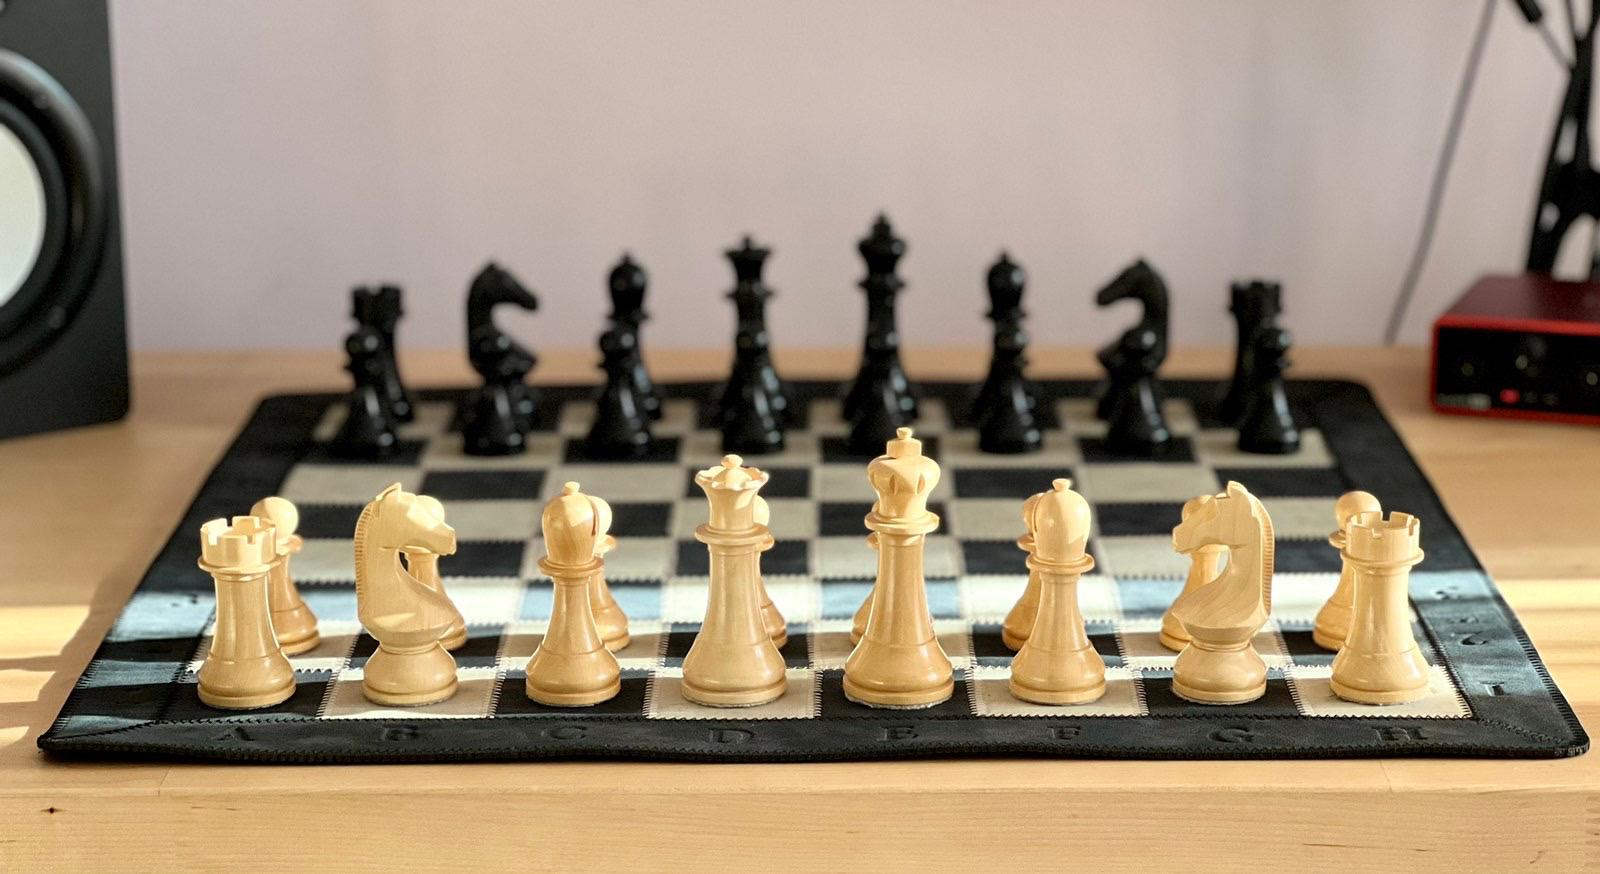 Standard Flat Tournament Chess Board (FIDE) - Henry Chess Sets